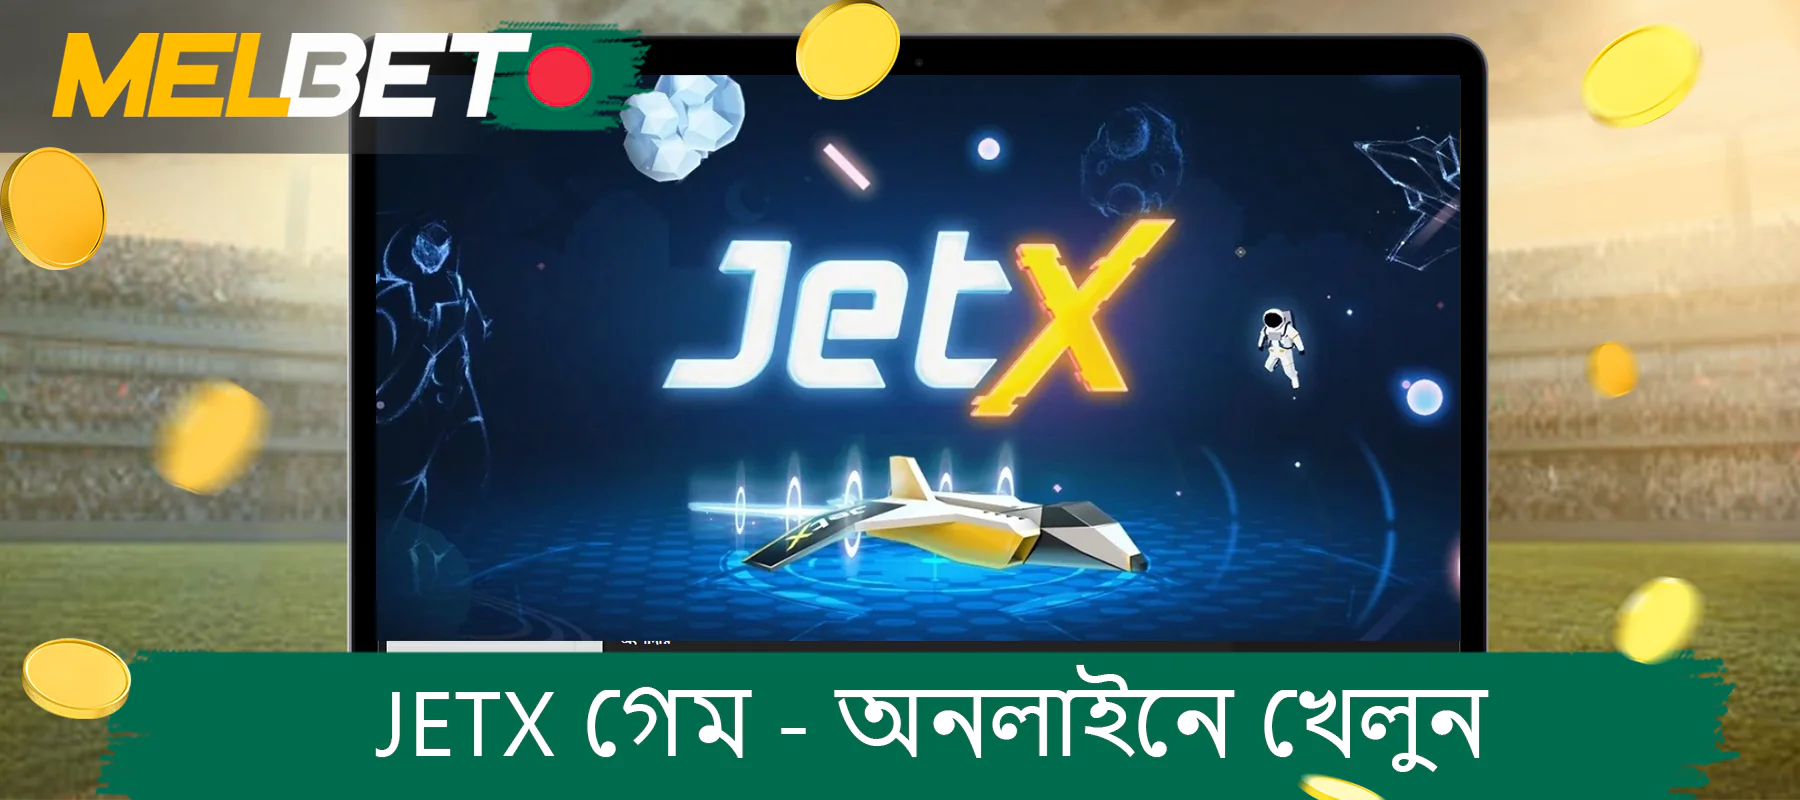 JetX গেম অনলাইন বাংলাদেশের Melbet ওয়েবসাইটে একটি জনপ্রিয় ক্র্যাশ গেম